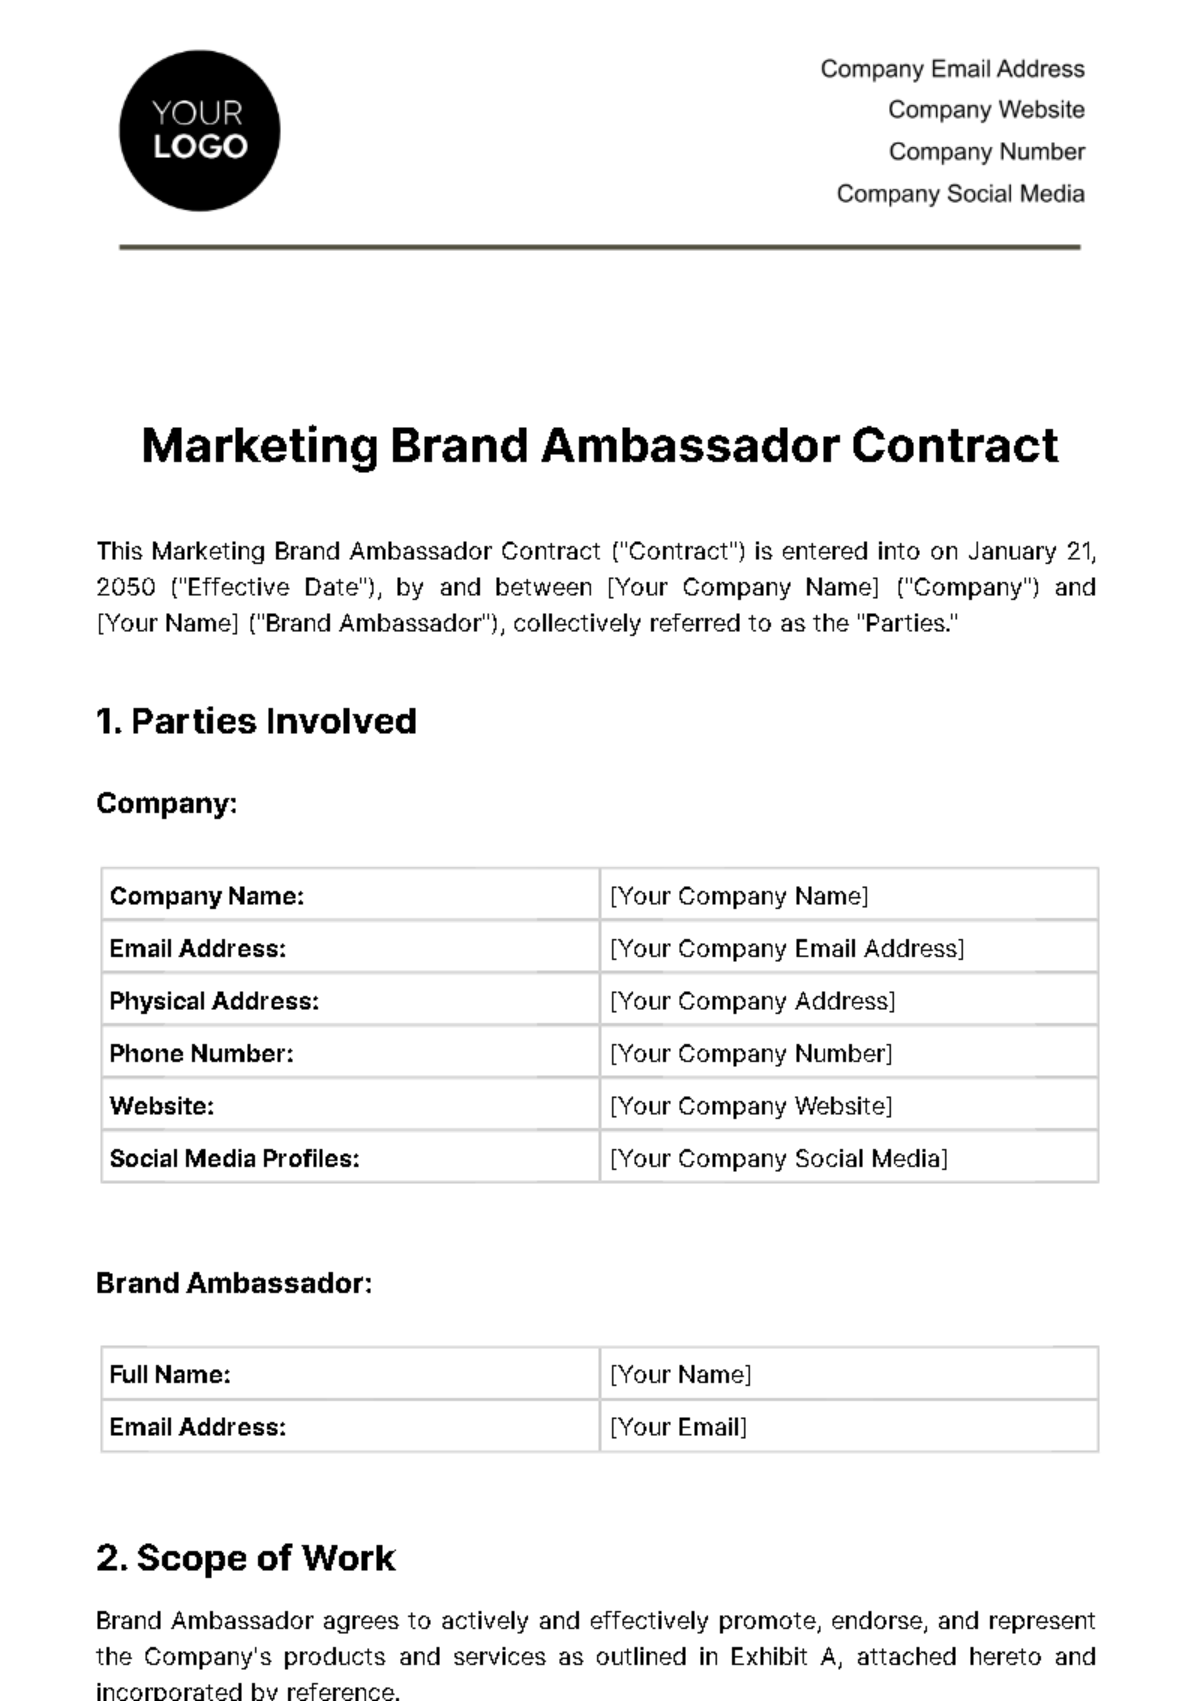 Free Marketing Brand Ambassador Contract Template